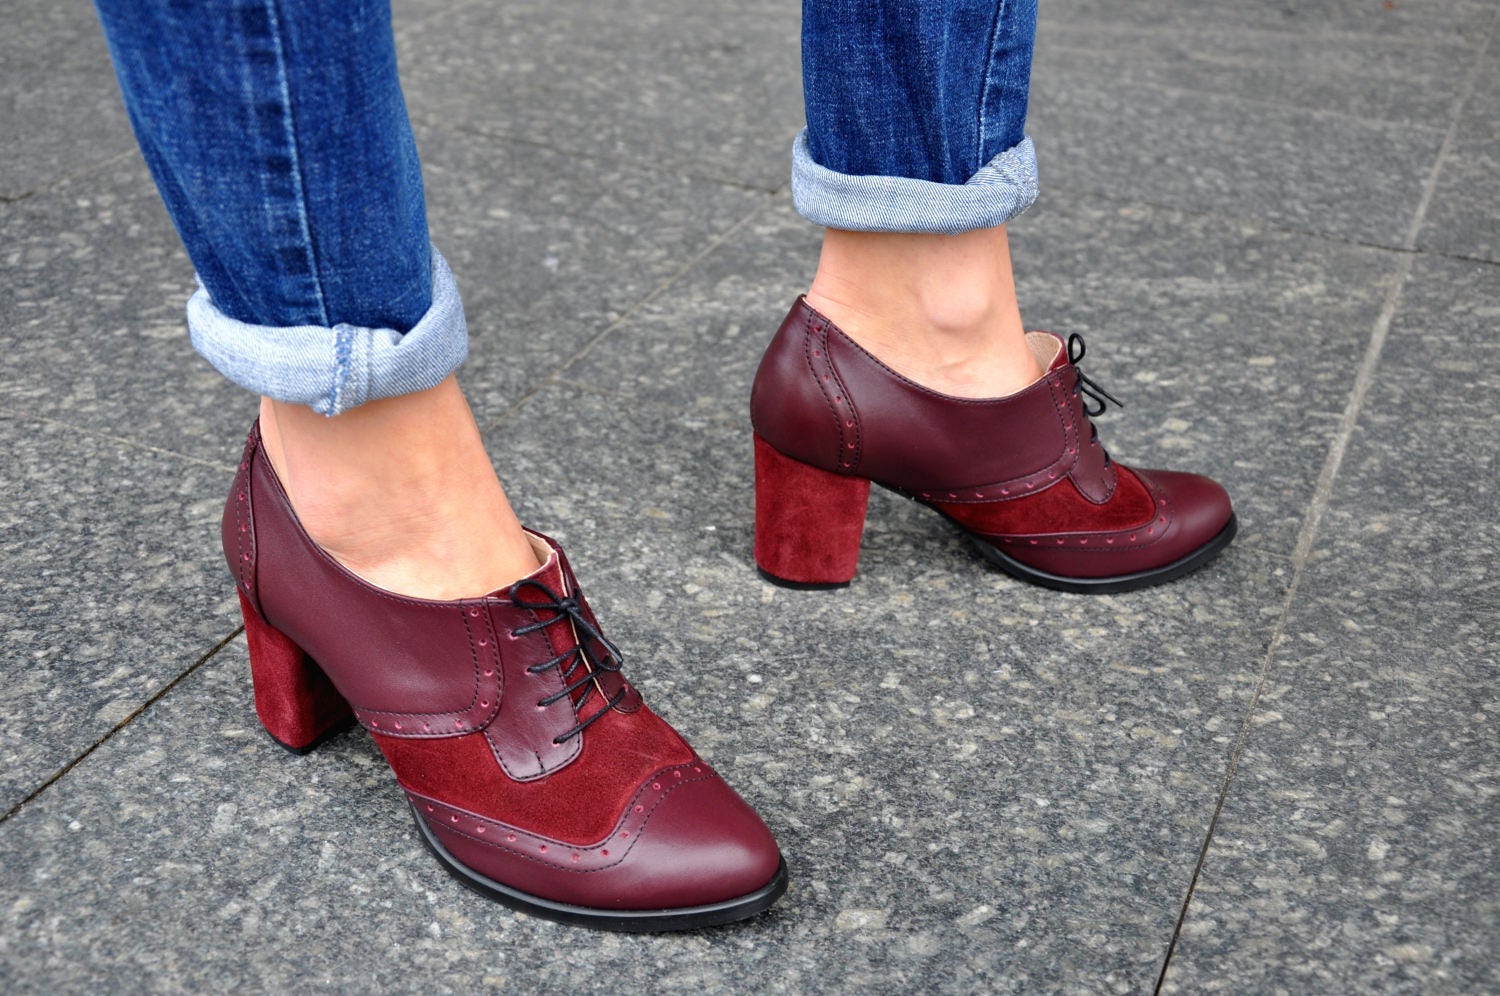 Fulham Oxford Pumps Womens Oxfords Leather Shoes Bordeaux - Etsy